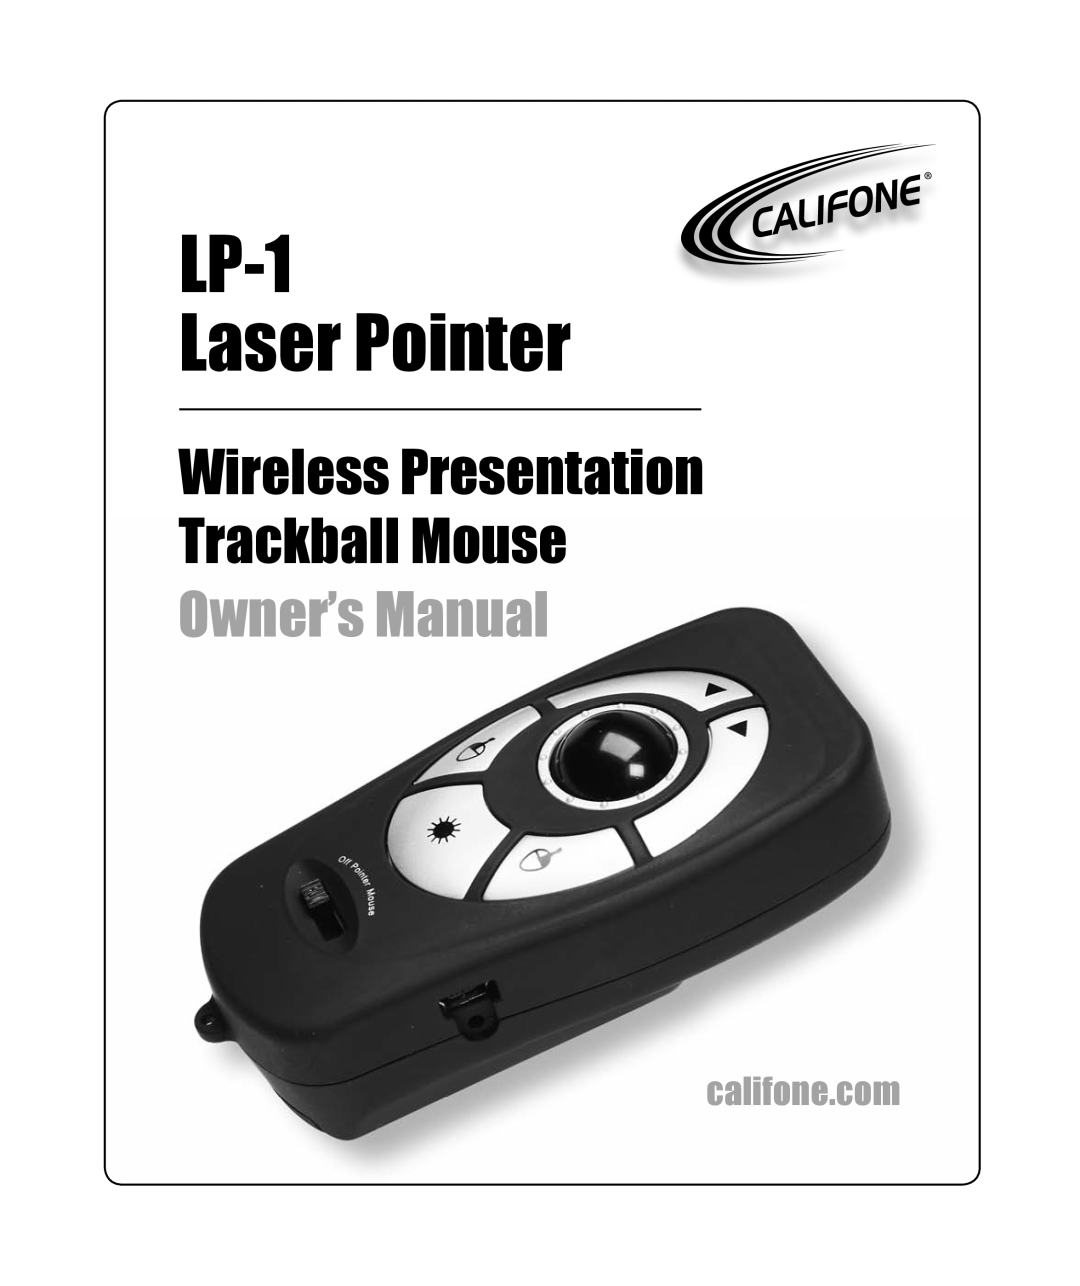 Califone owner manual LP-1 Laser Pointer, Wireless Presentation Trackball Mouse, Owner’s Manual, califone.com 